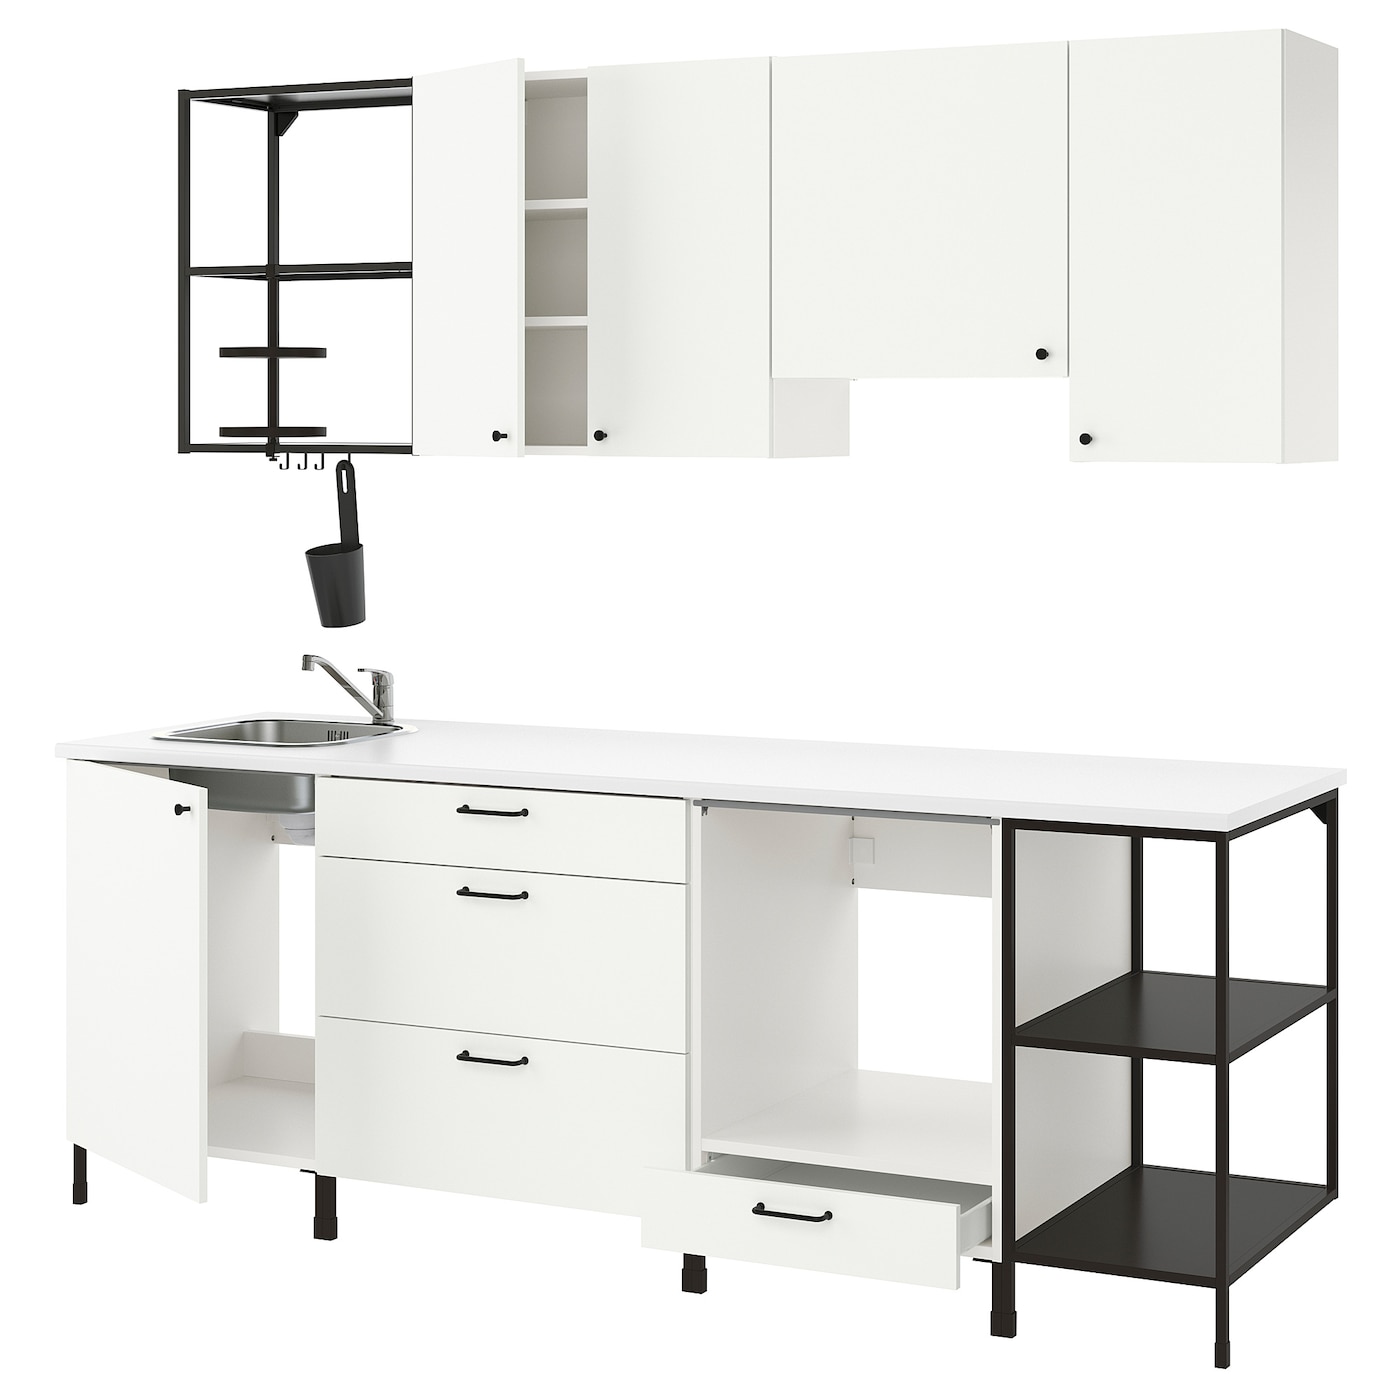 Кухня - ENHET  IKEA/ ЭНХЕТ ИКЕА, 243х222 см, белый/черный